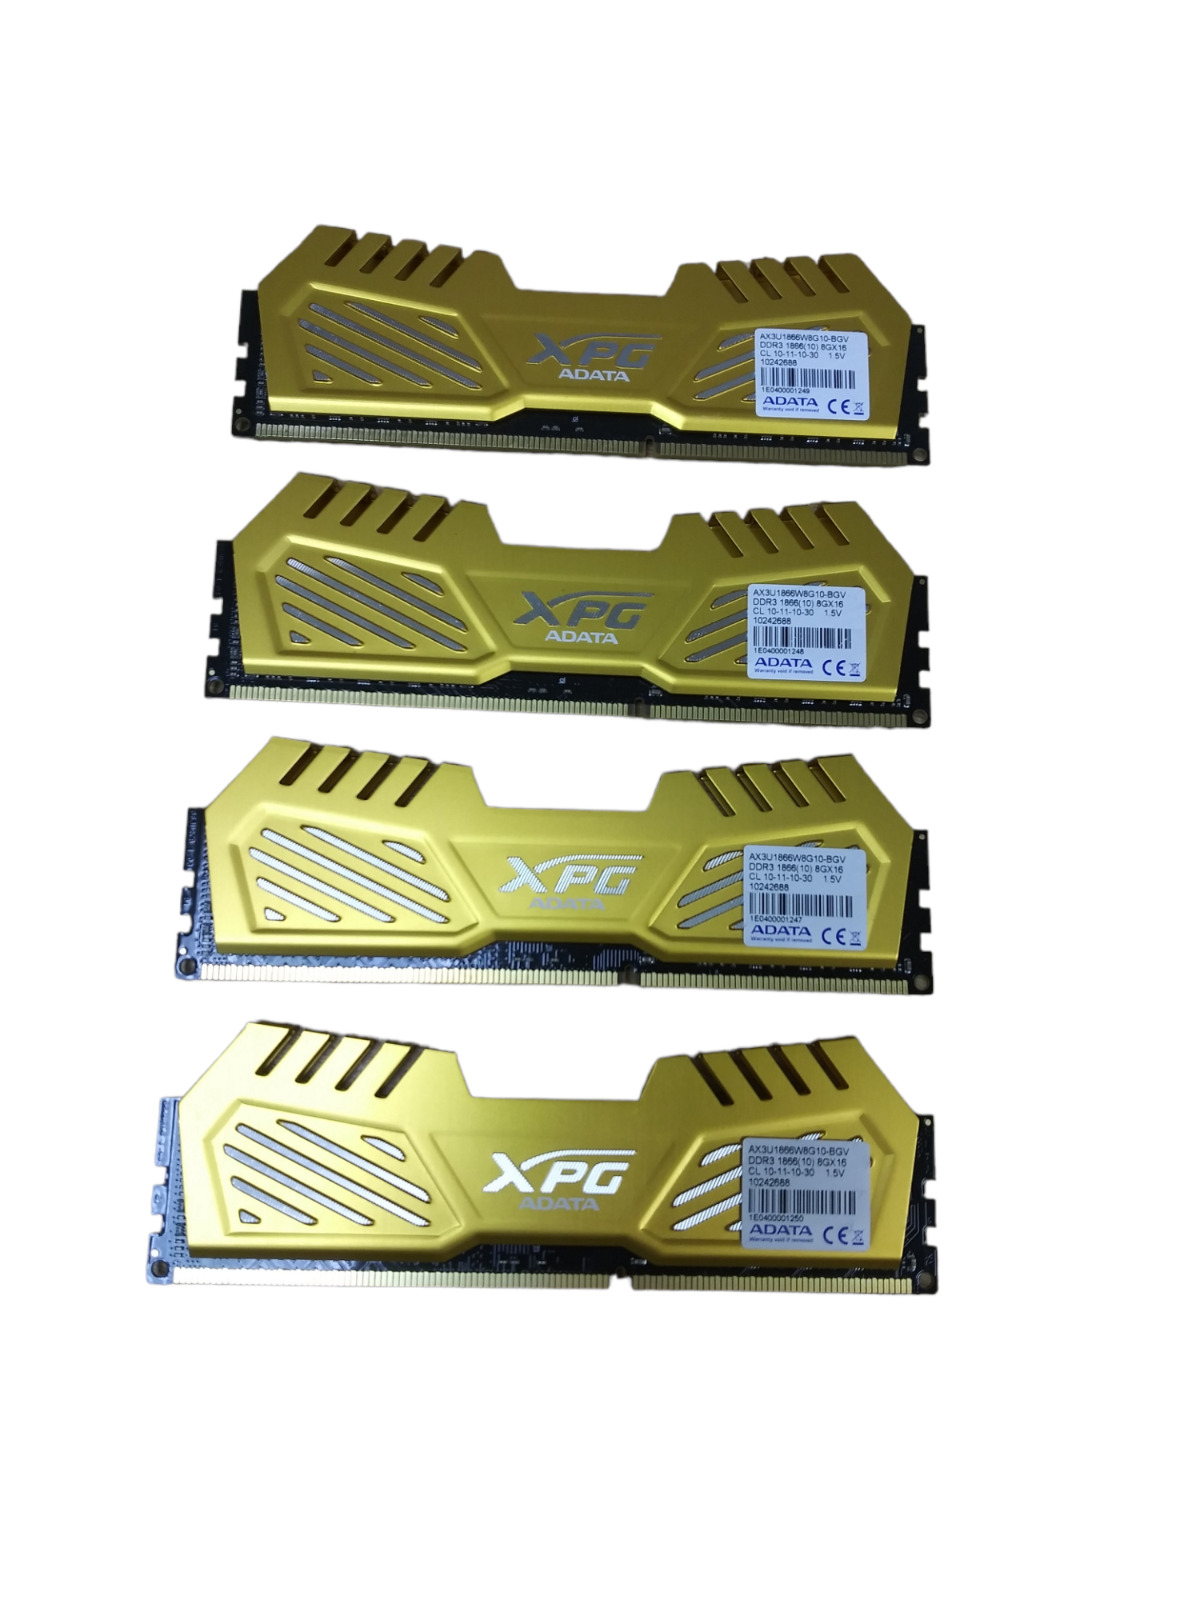 Adata XPG AX3U1866W8G10-BGV DDR3-1866 32GB 4x8GB kit Gaming Memory ram tested